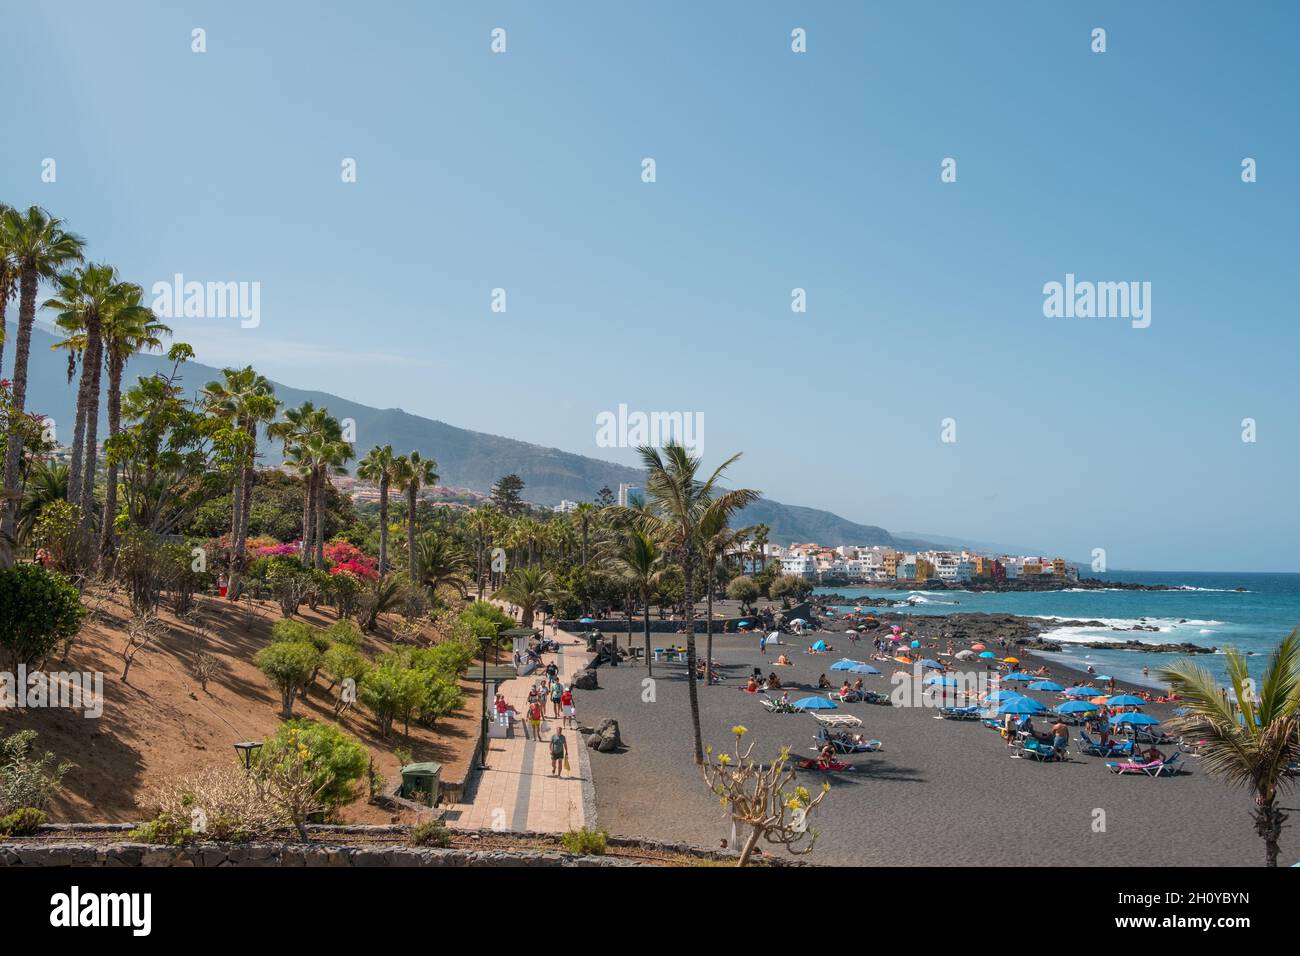 Tenerife, Spain - September, 2021: People at beach (Playa Jardin) in Puerto de la Cruz, Tenerife, Canary Islands Stock Photo